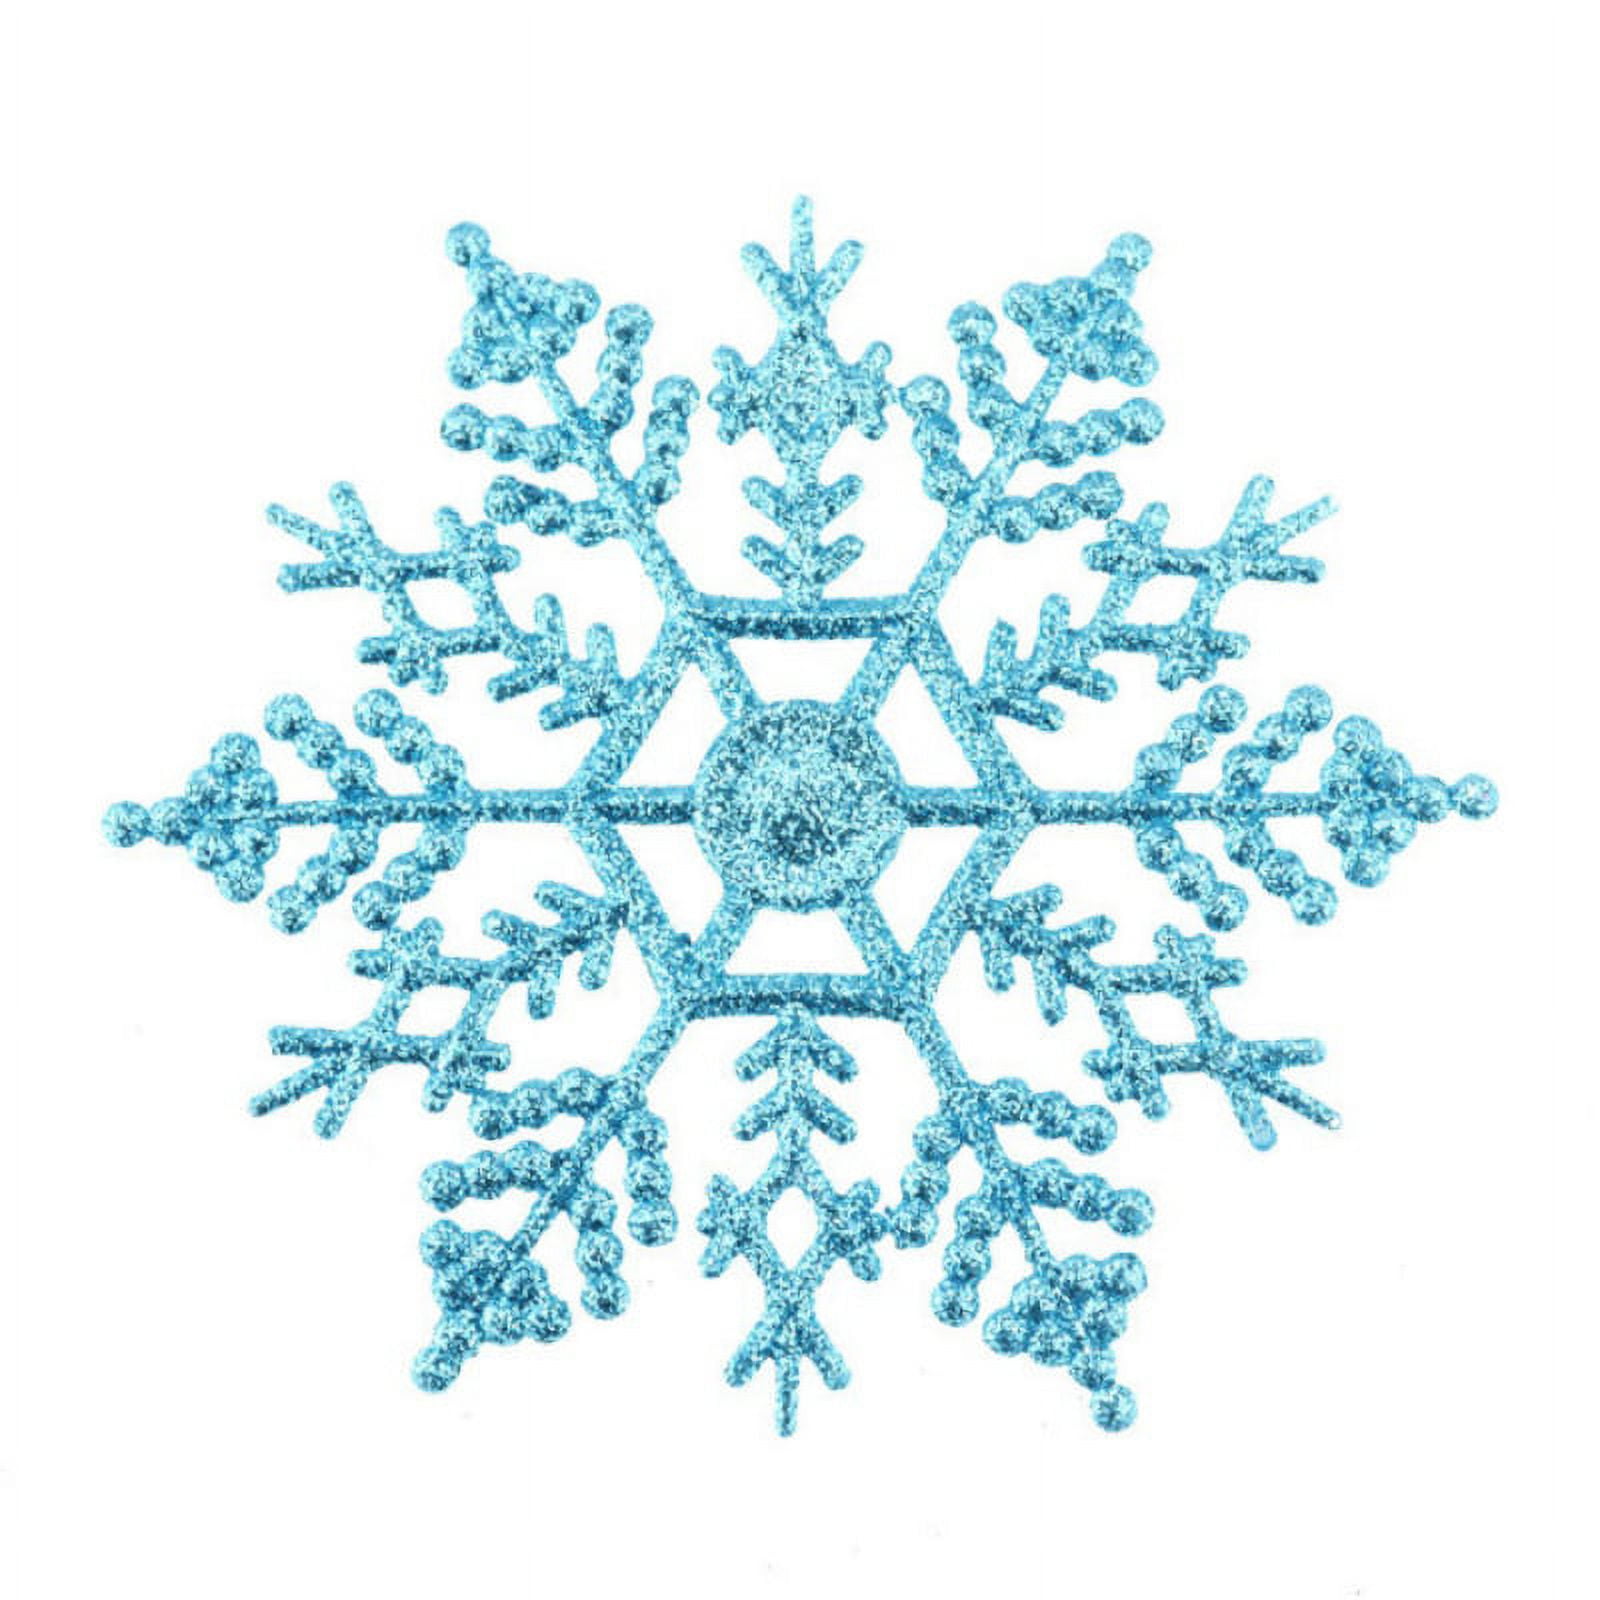 110 Pieces Tmflexe Plastic White Snowflakes Ornaments for Christmas Decoration 6 Size DIY Art Crafts Christmas Decoration Ornaments Assorted Sizes